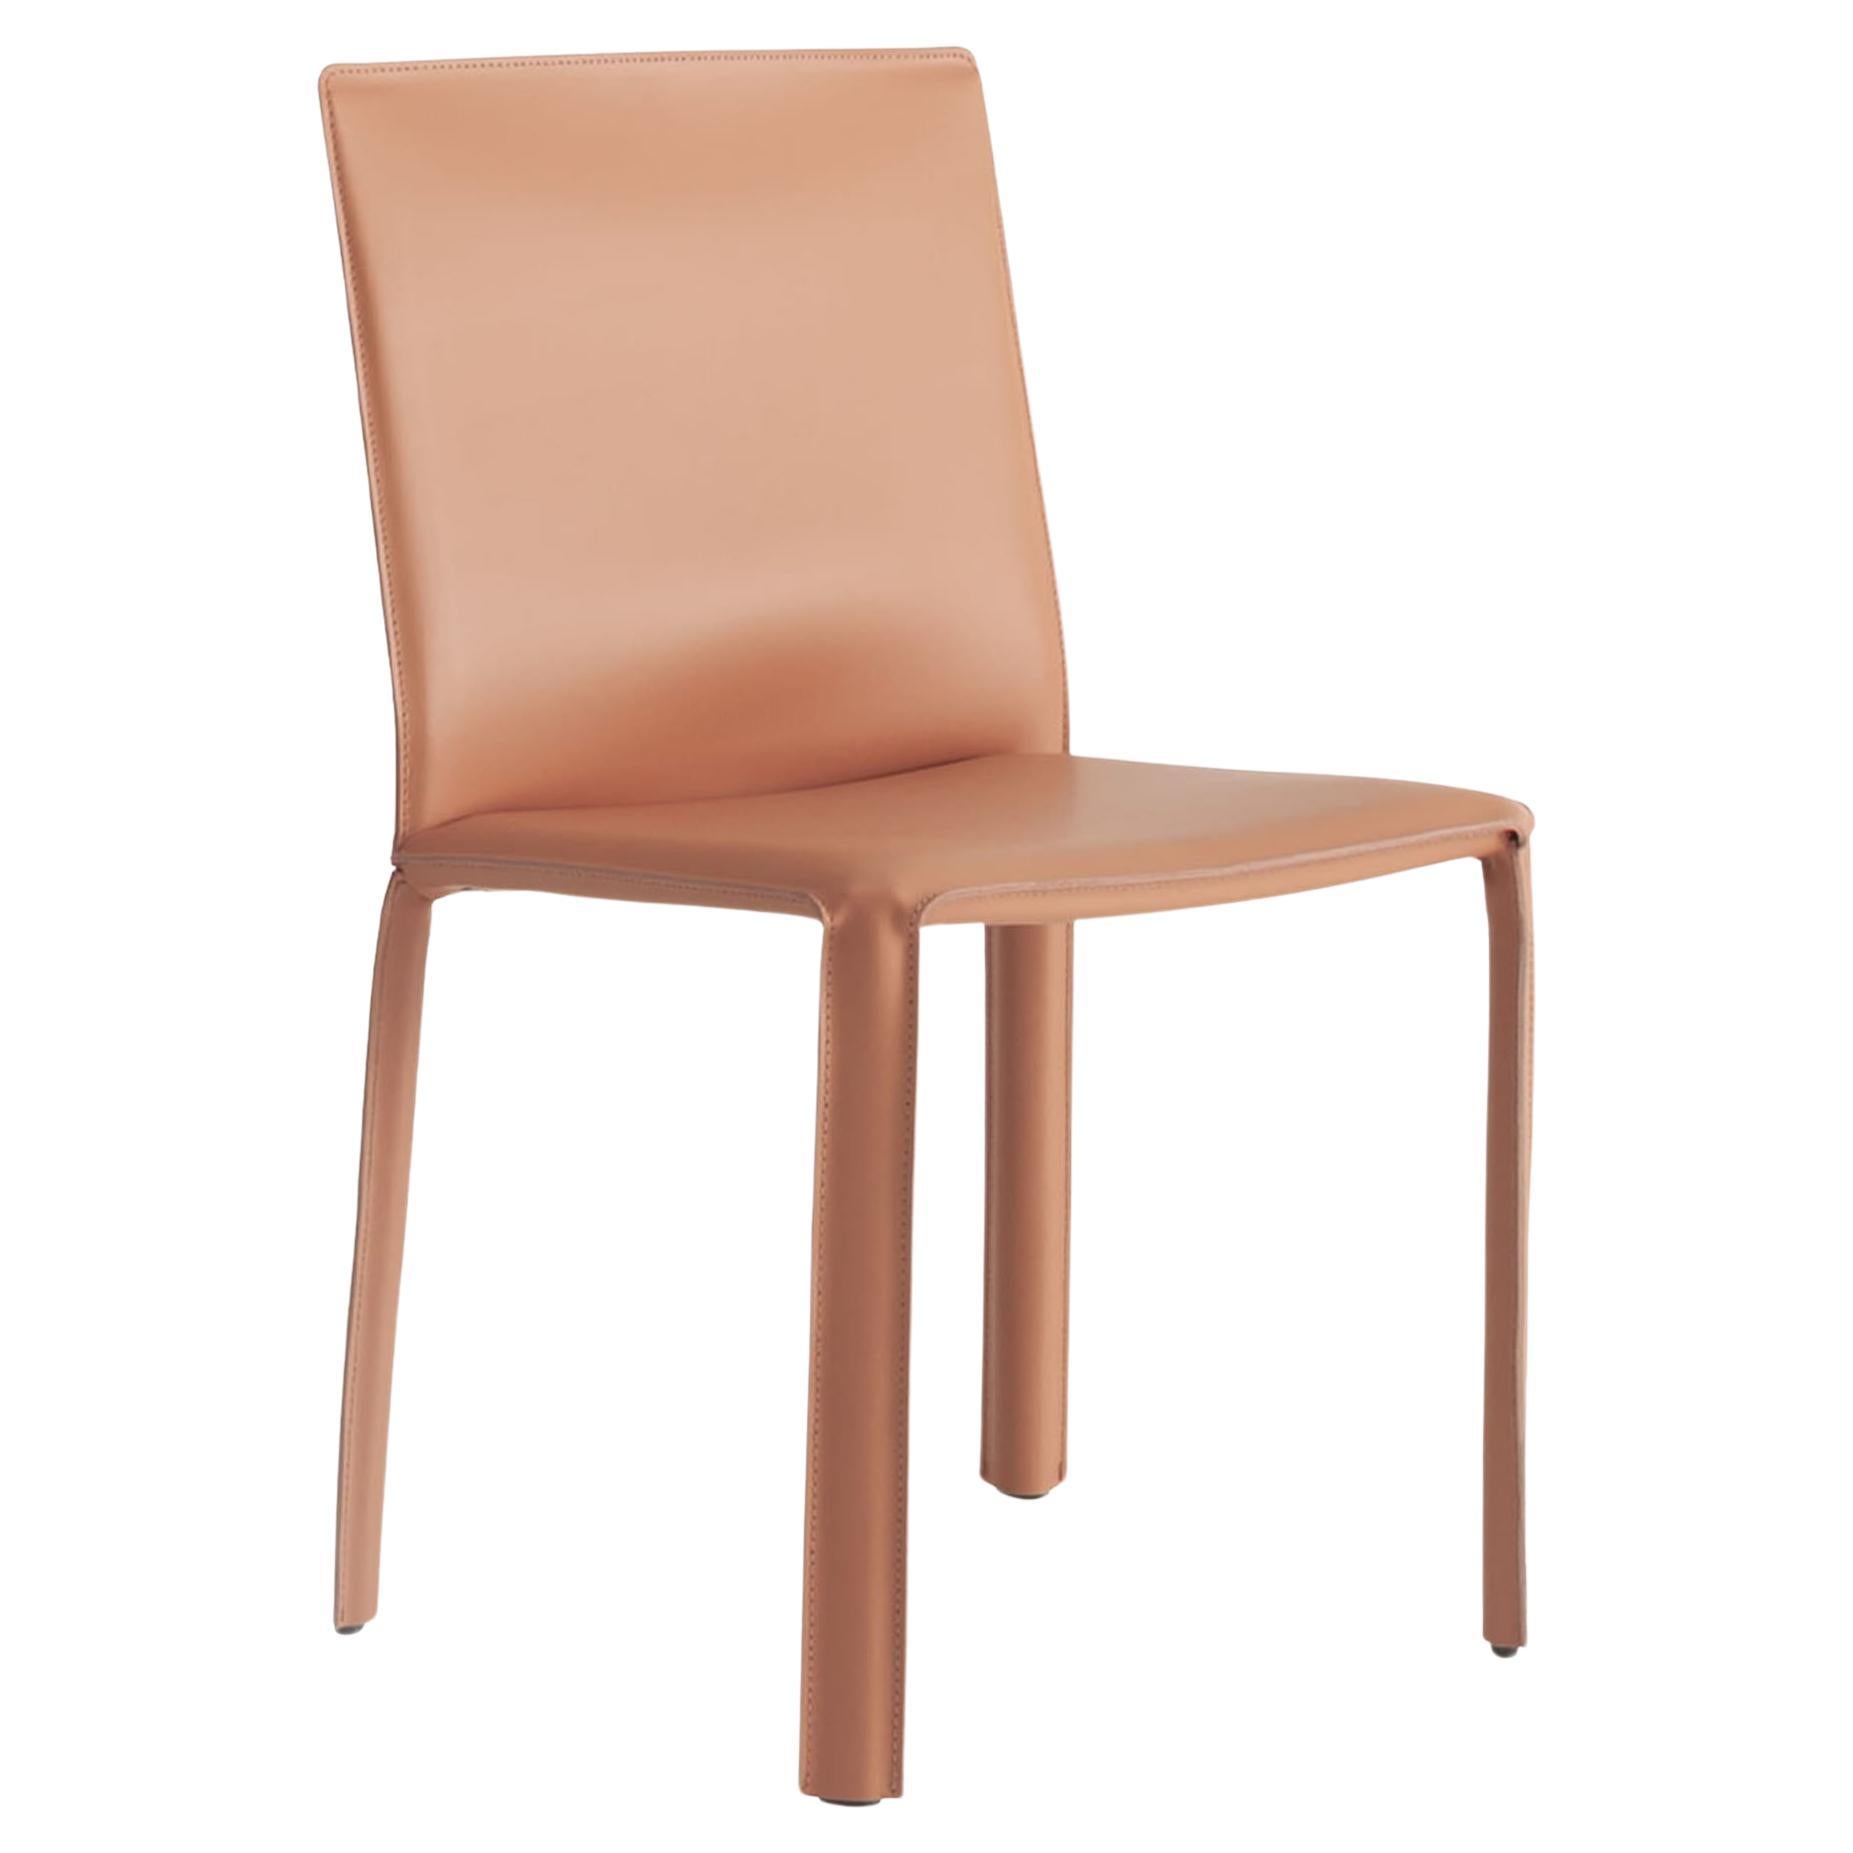 Jumpsuite Cognac-Toned Leather Chair For Sale